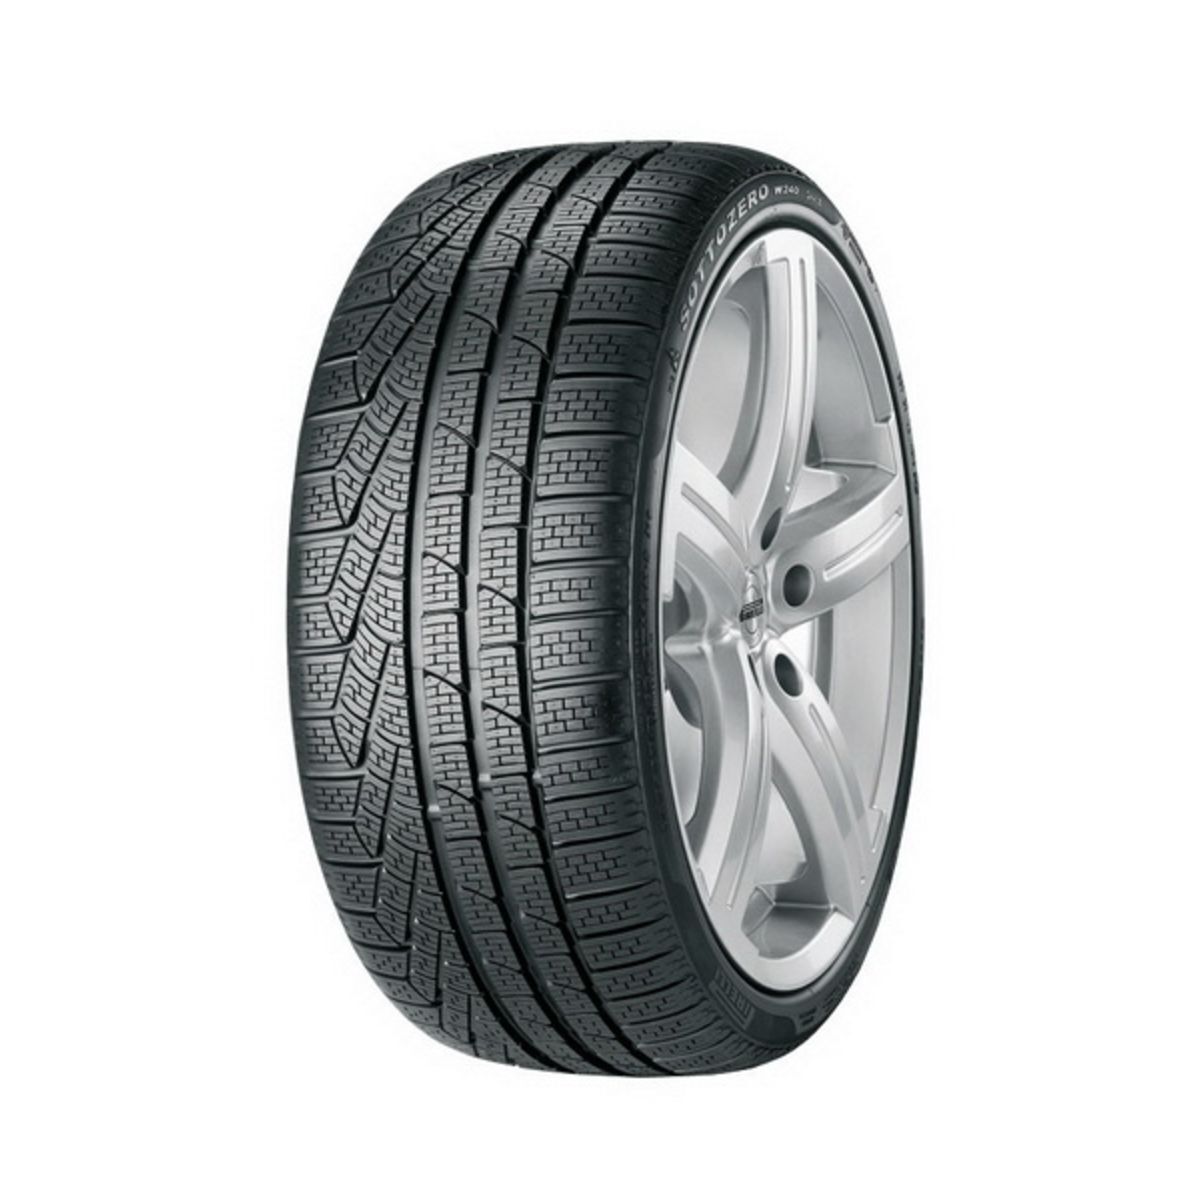 Neumáticos de invierno PIRELLI SottoZero serie II 215/45R18 XL 93V